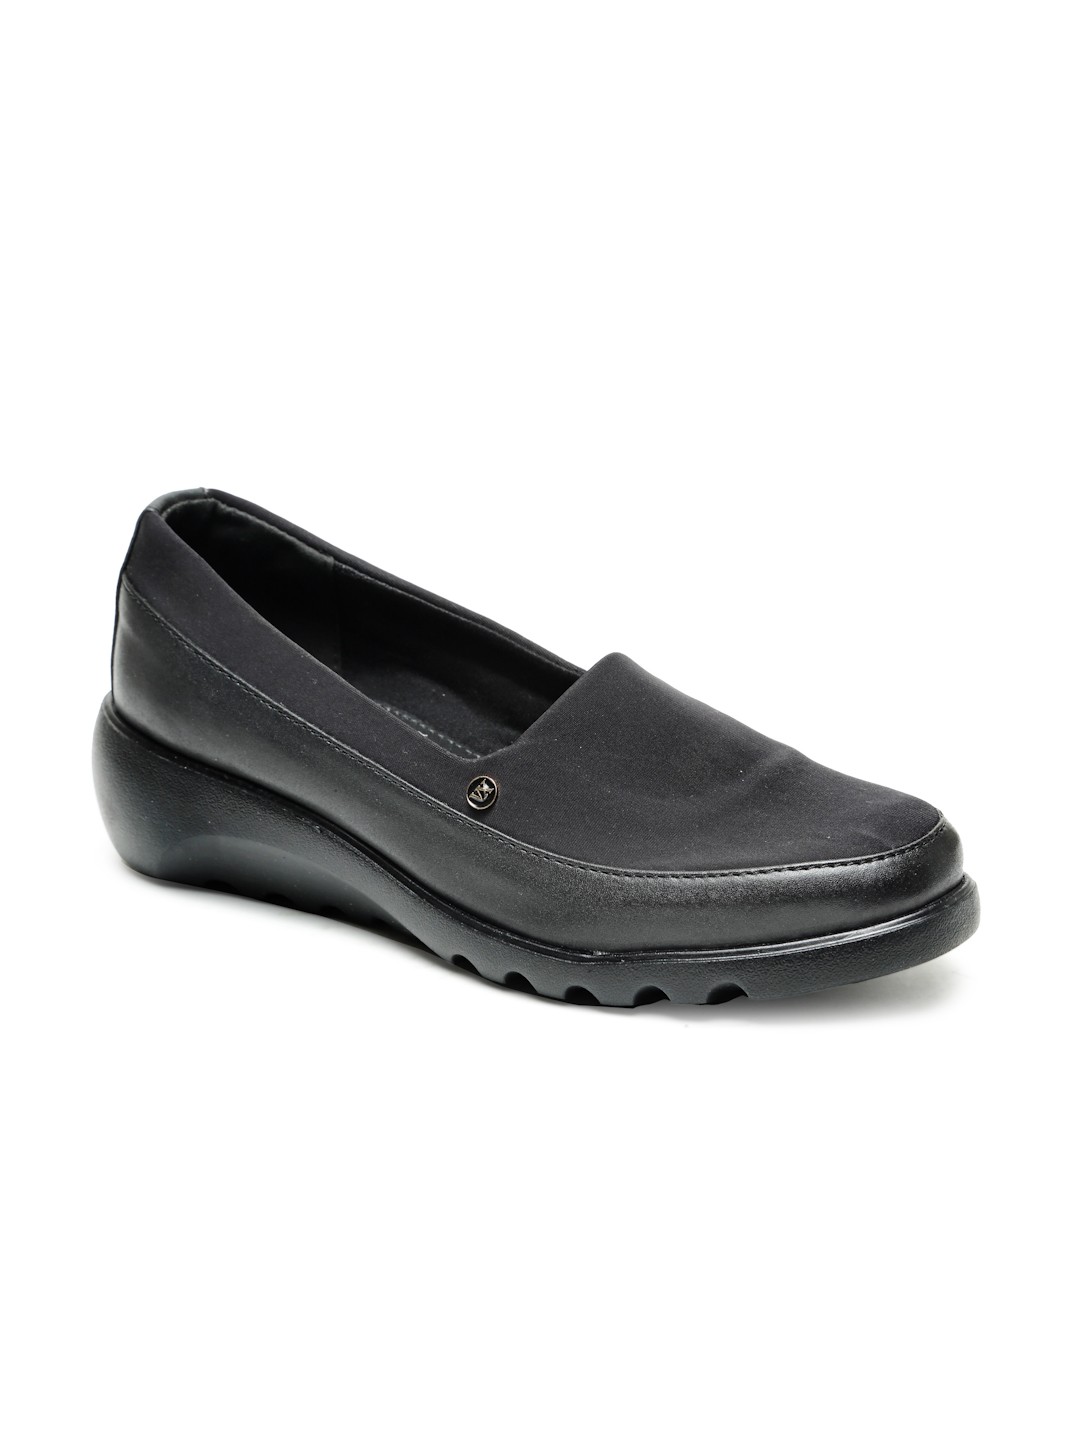 Buy Von Wellx Germany Comfort Women's Black Casual Shoes Elsa Online in Galle